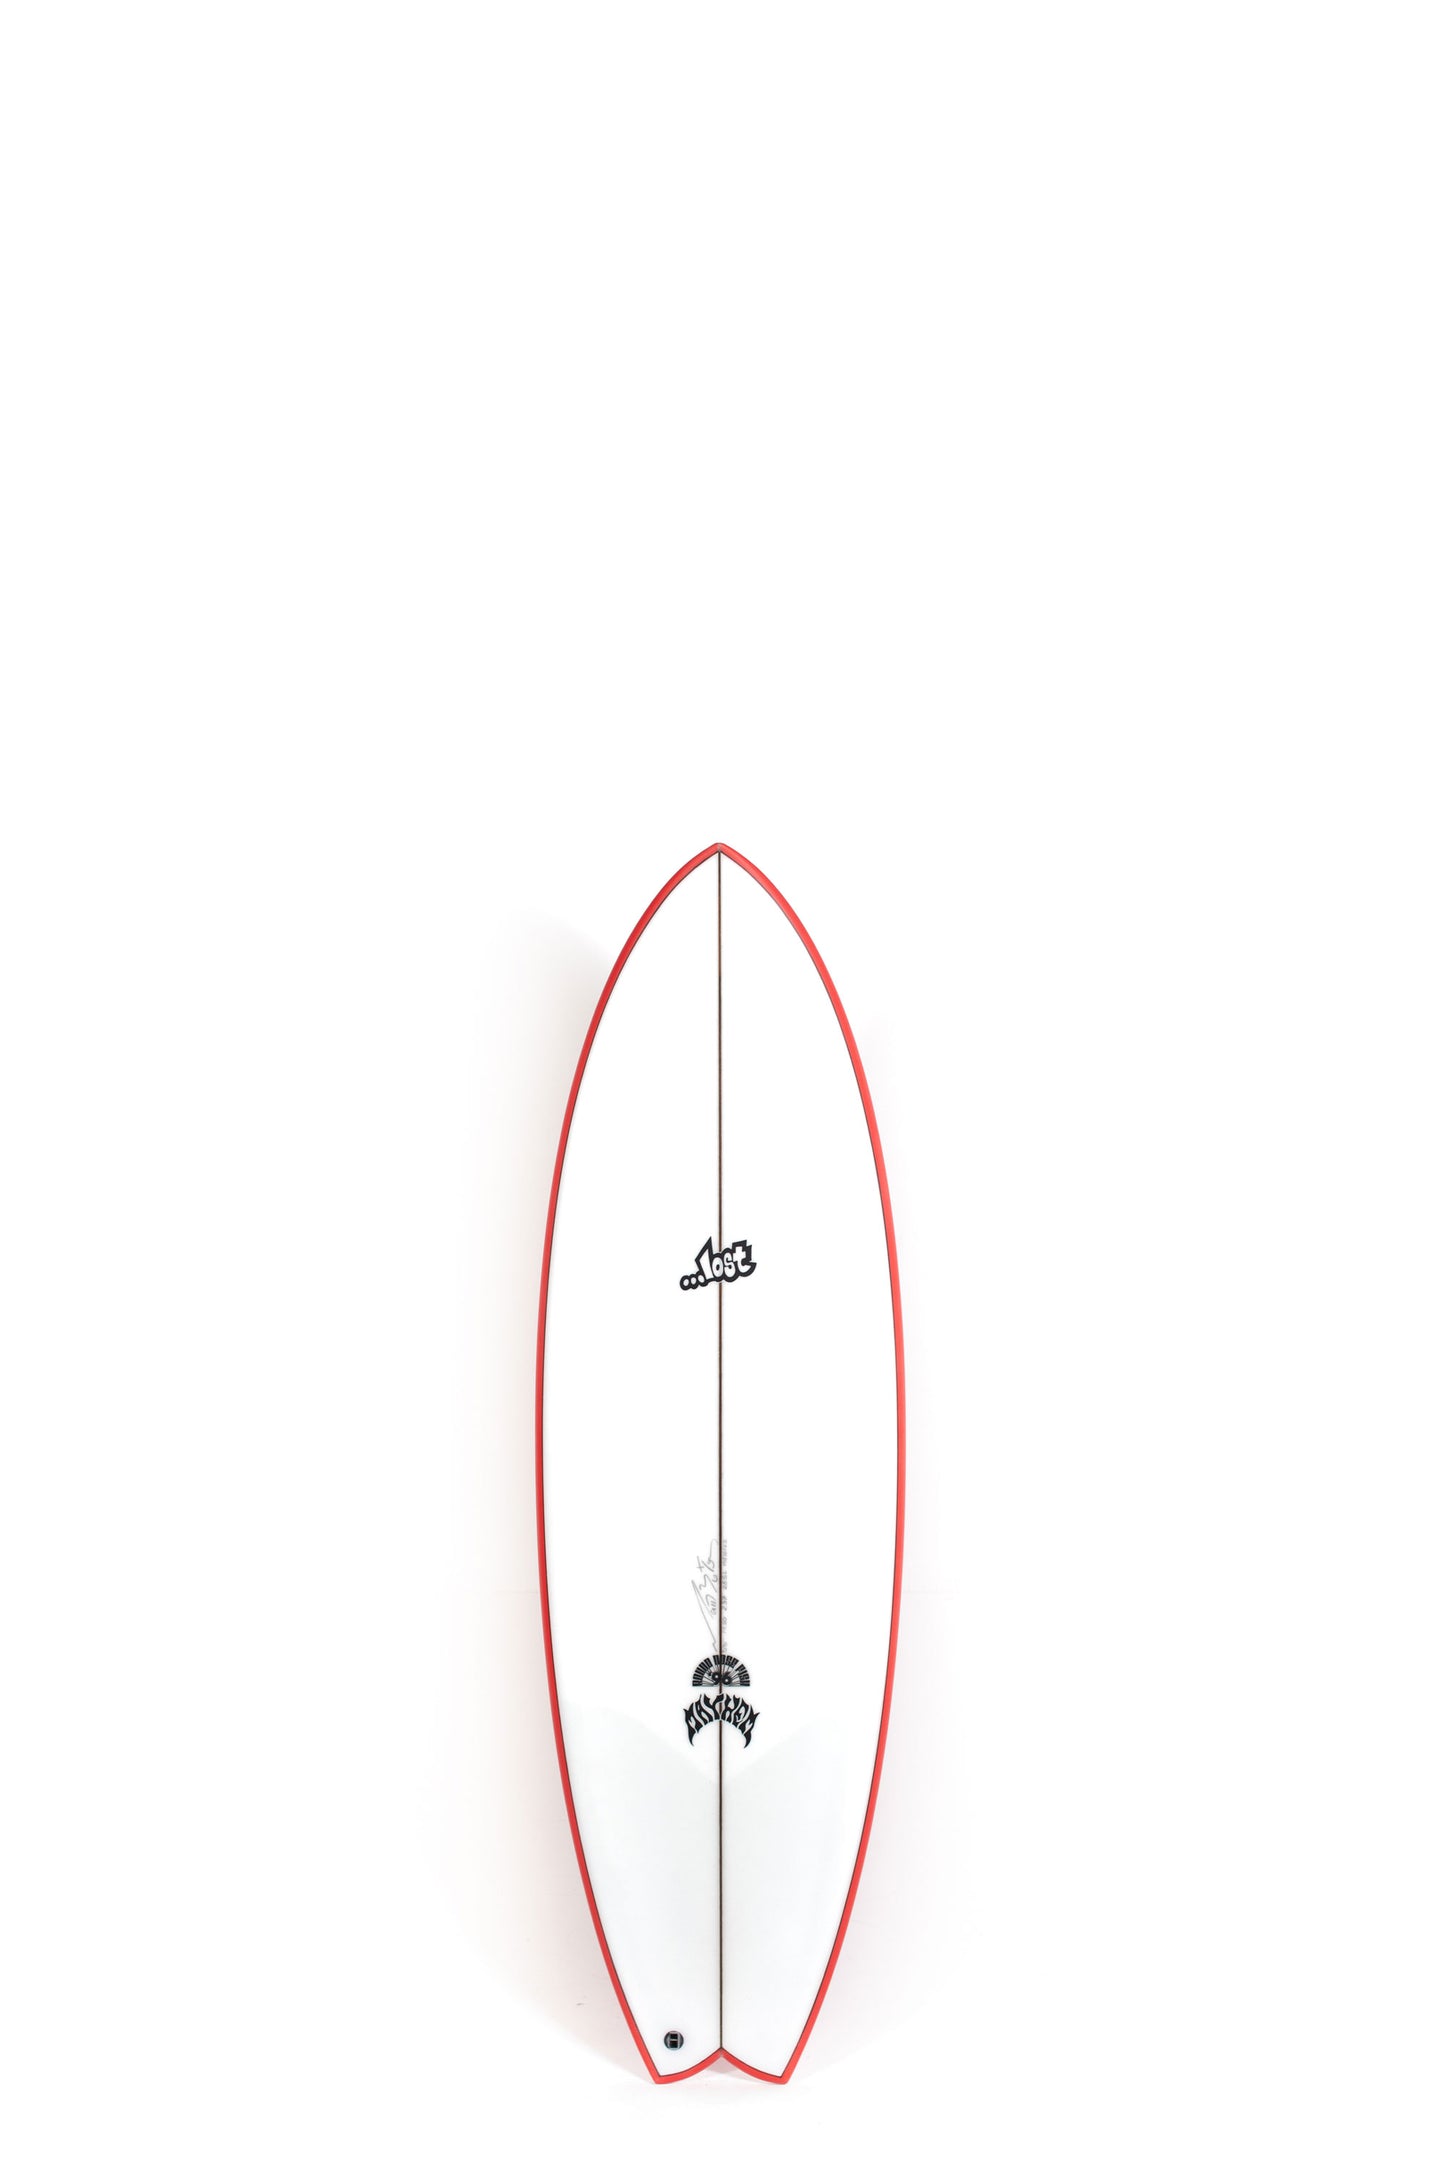 Pukas Surf Shop - Lost Surfboard - ROUND NOSE FISH - RNF '96 by Matt Biolos - 5'5"x 19.5" x 2.37 x 28,5L - MH16162